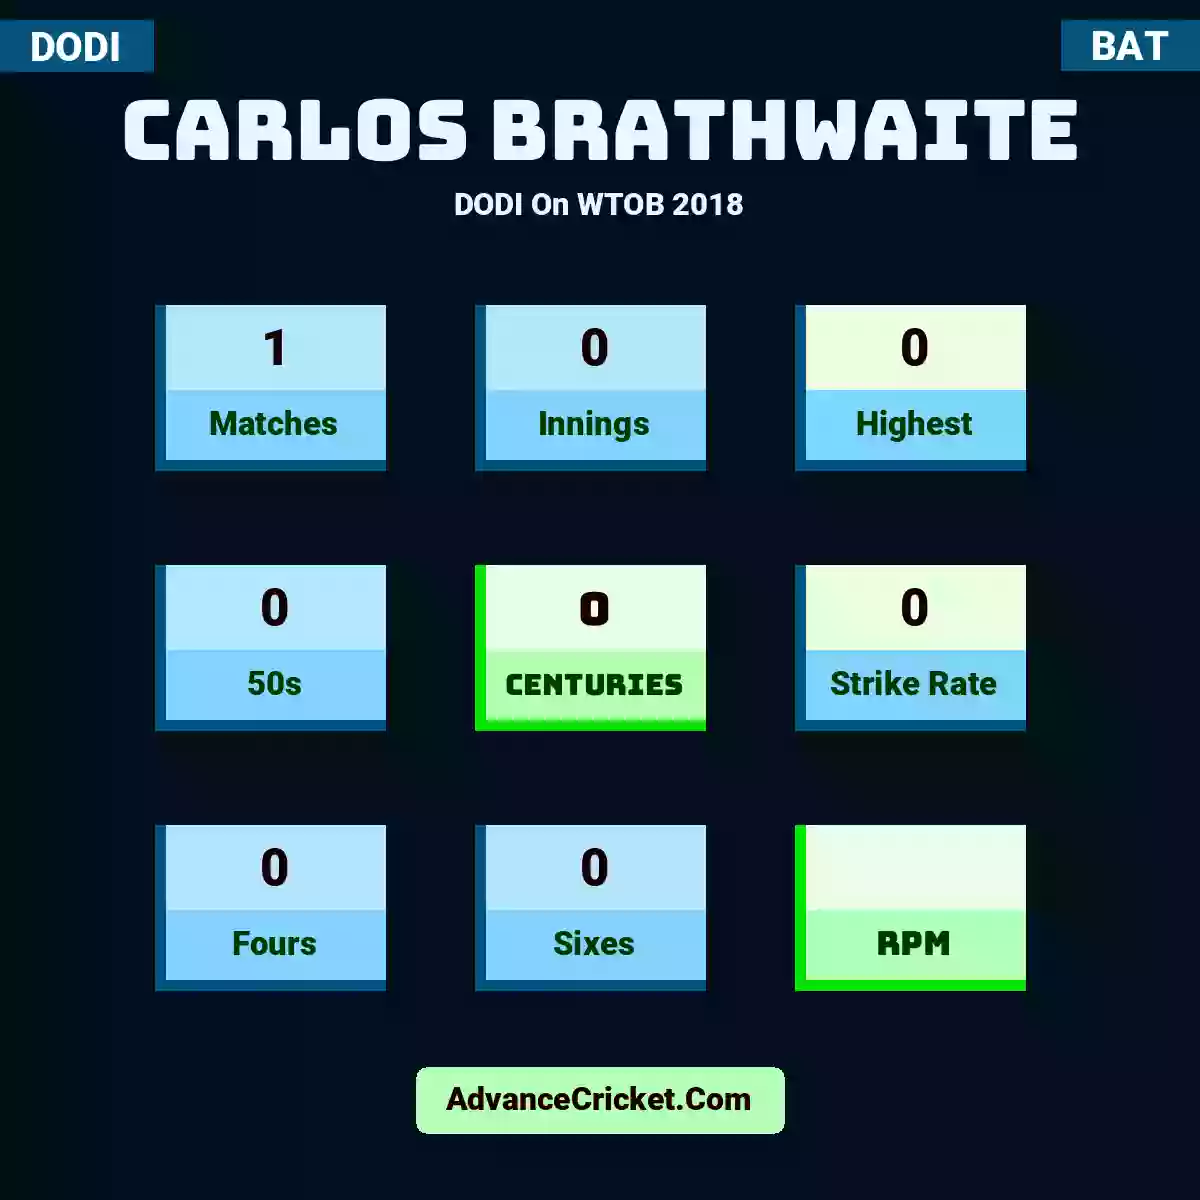 Carlos Brathwaite DODI  On WTOB 2018, Carlos Brathwaite played 1 matches, scored 0 runs as highest, 0 half-centuries, and 0 centuries, with a strike rate of 0. C.Brathwaite hit 0 fours and 0 sixes.